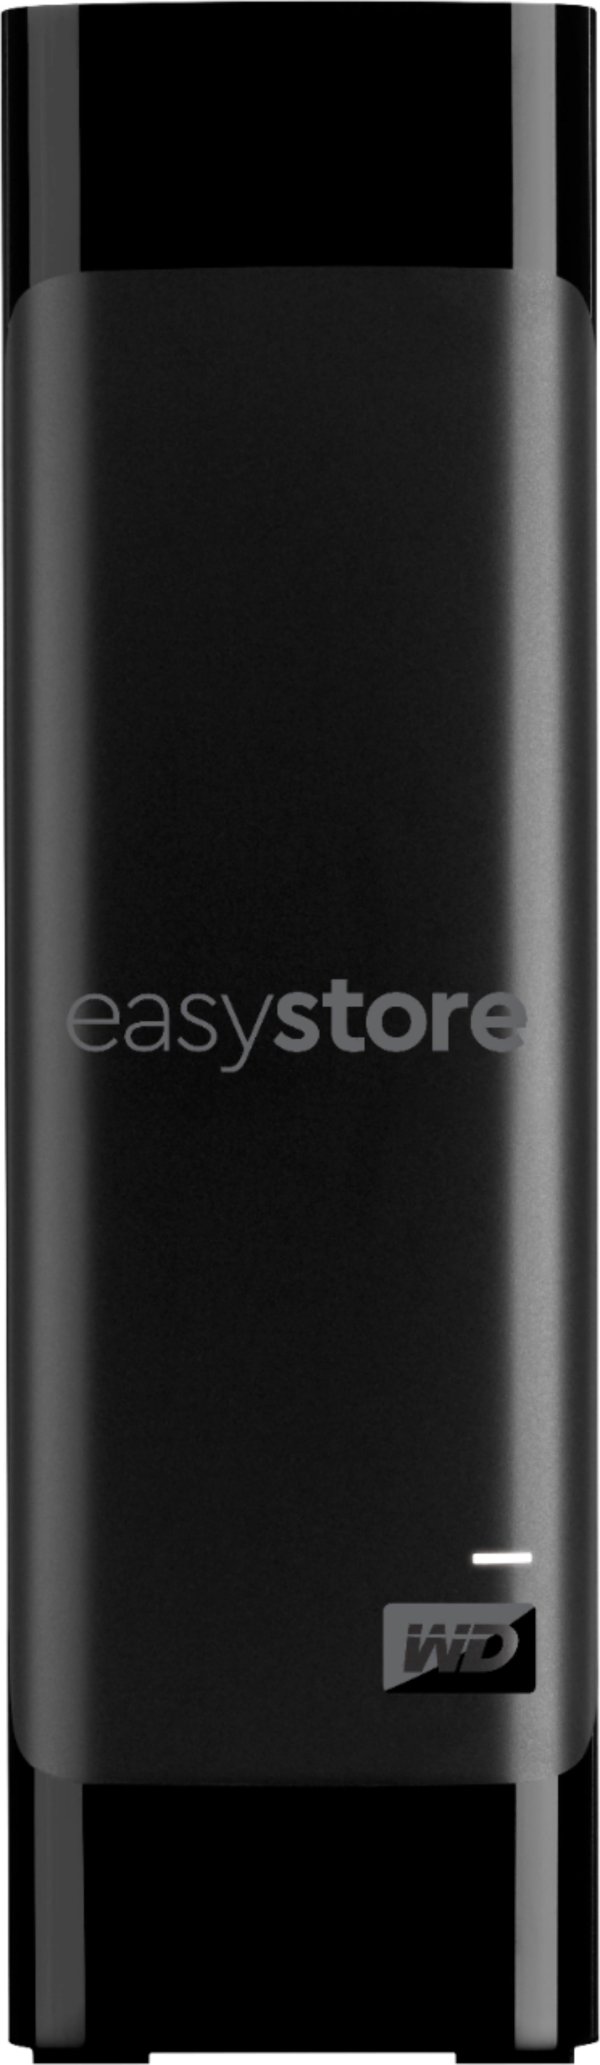 easystore 18TB USB 3.0 外置硬盘